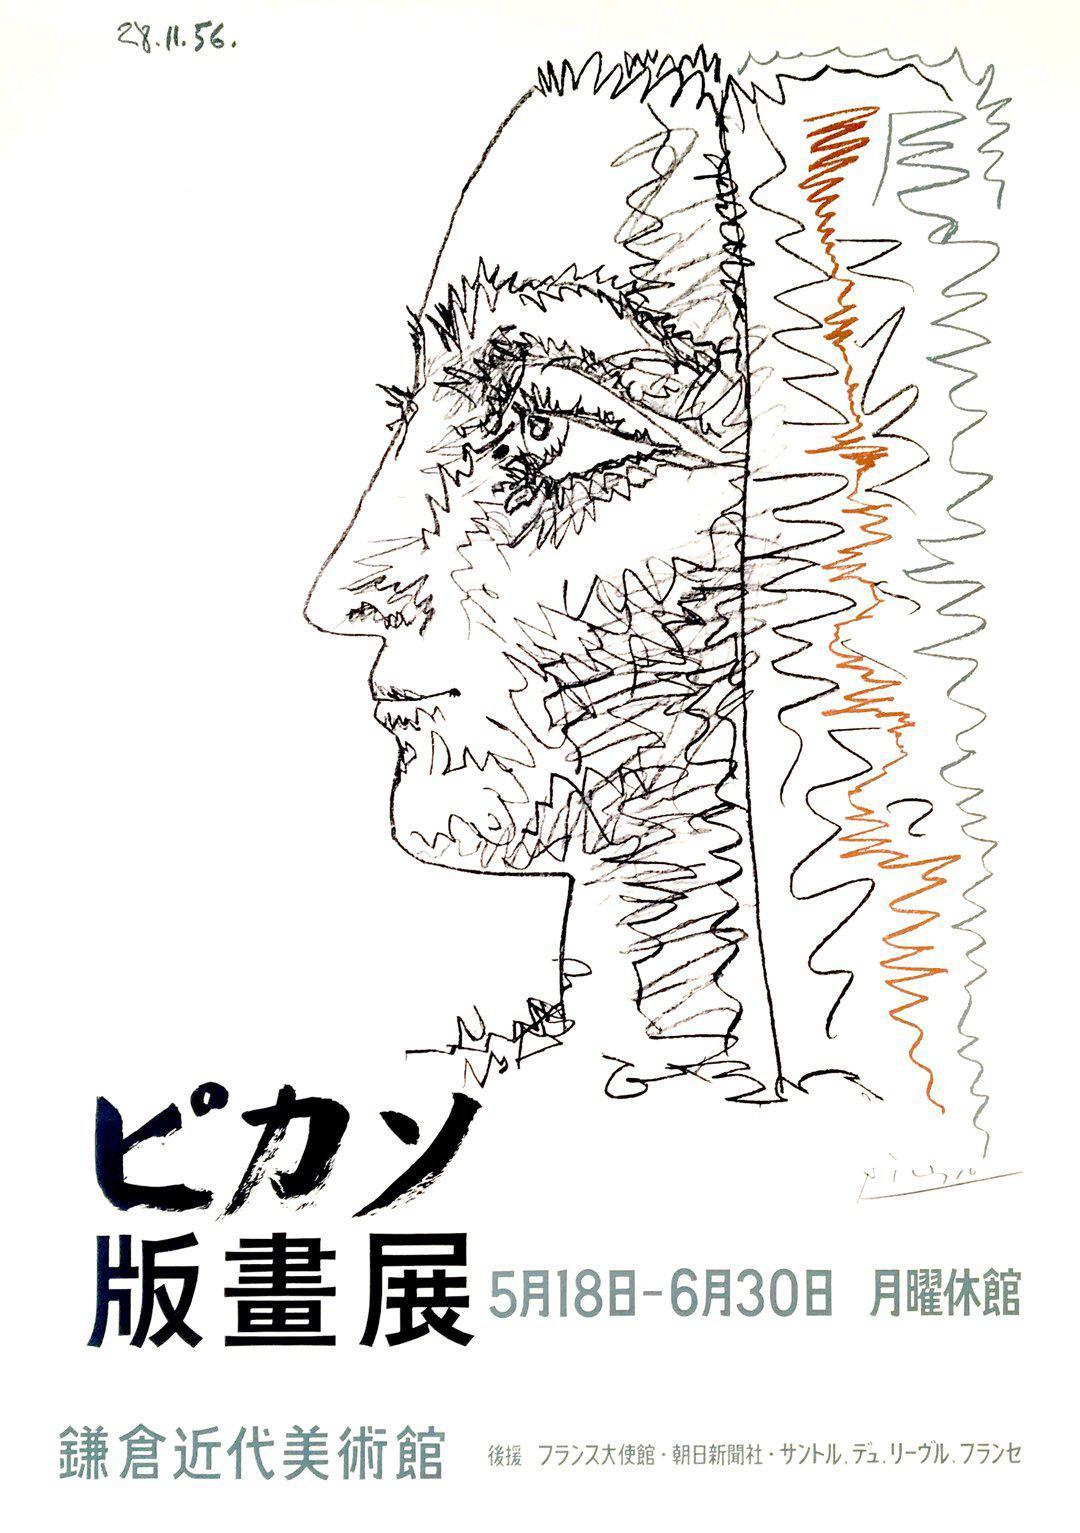 Original Pablo Picasso Poster Profil enTrois Couleurs Chinese 1956